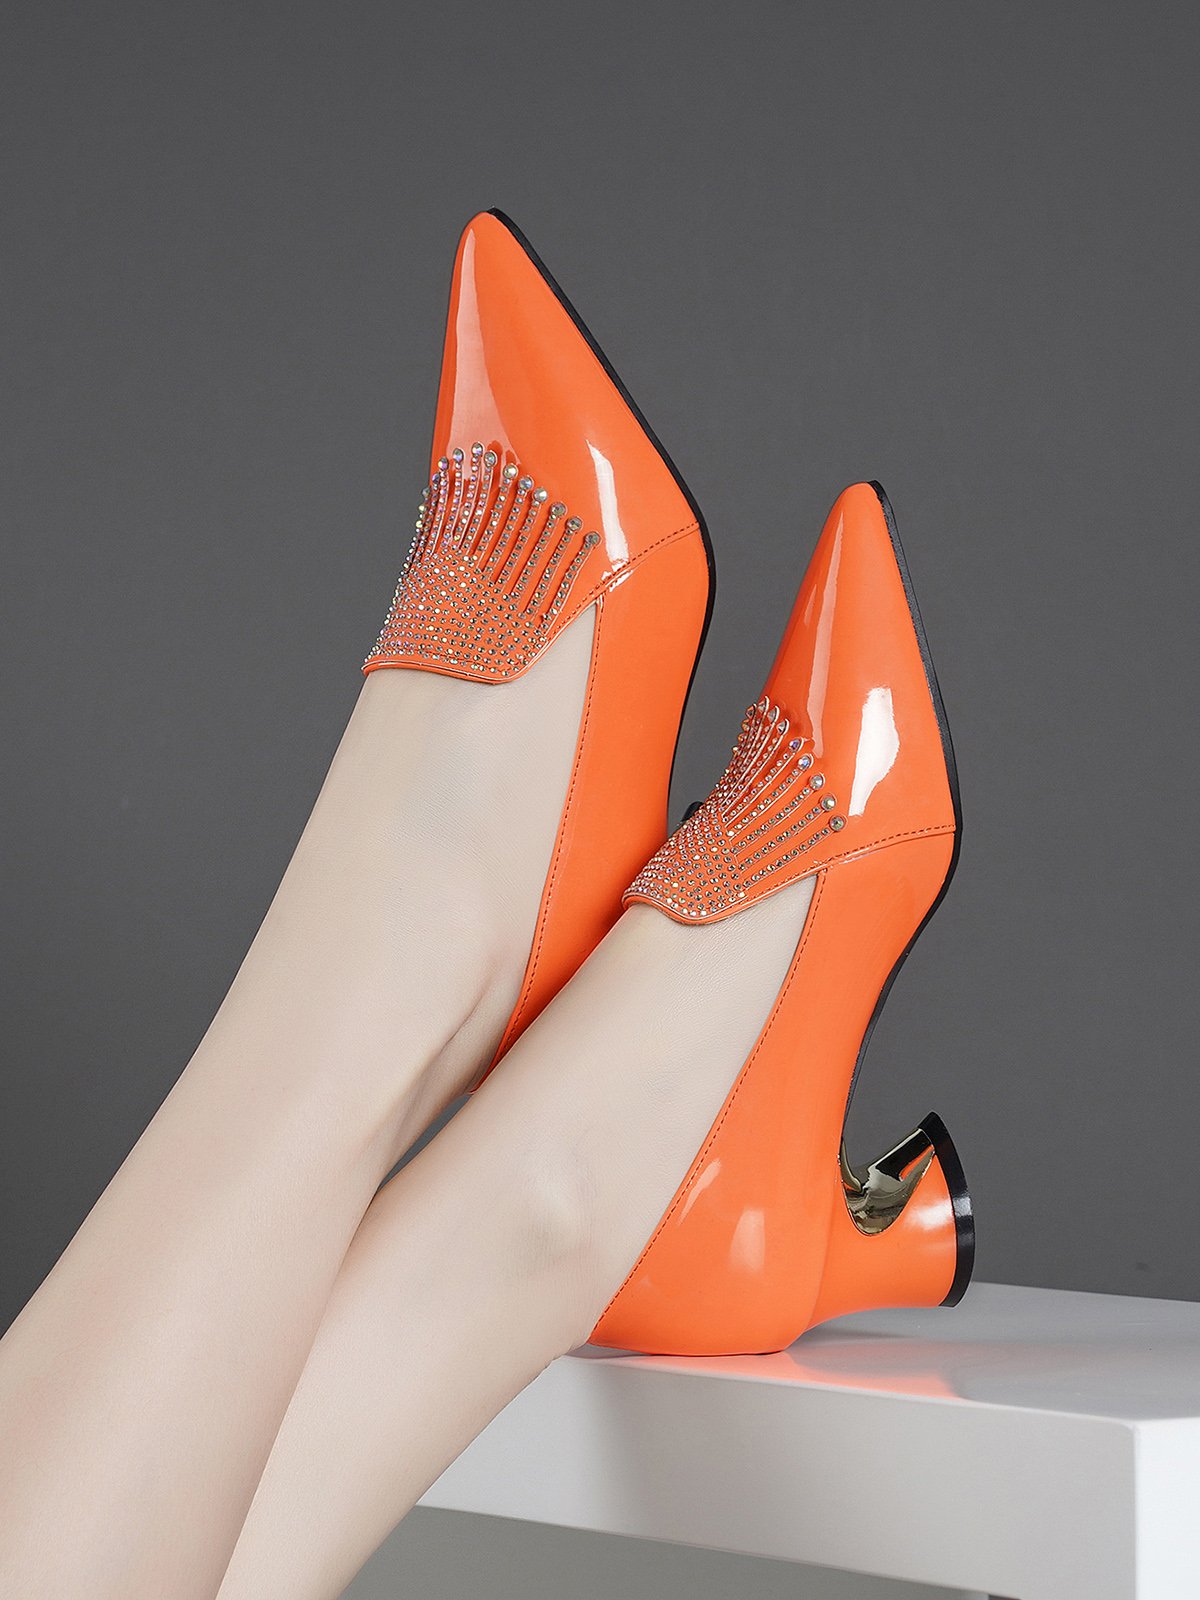 Rhinestone Patent Leather Pumps Spool Heel Dress Shoes